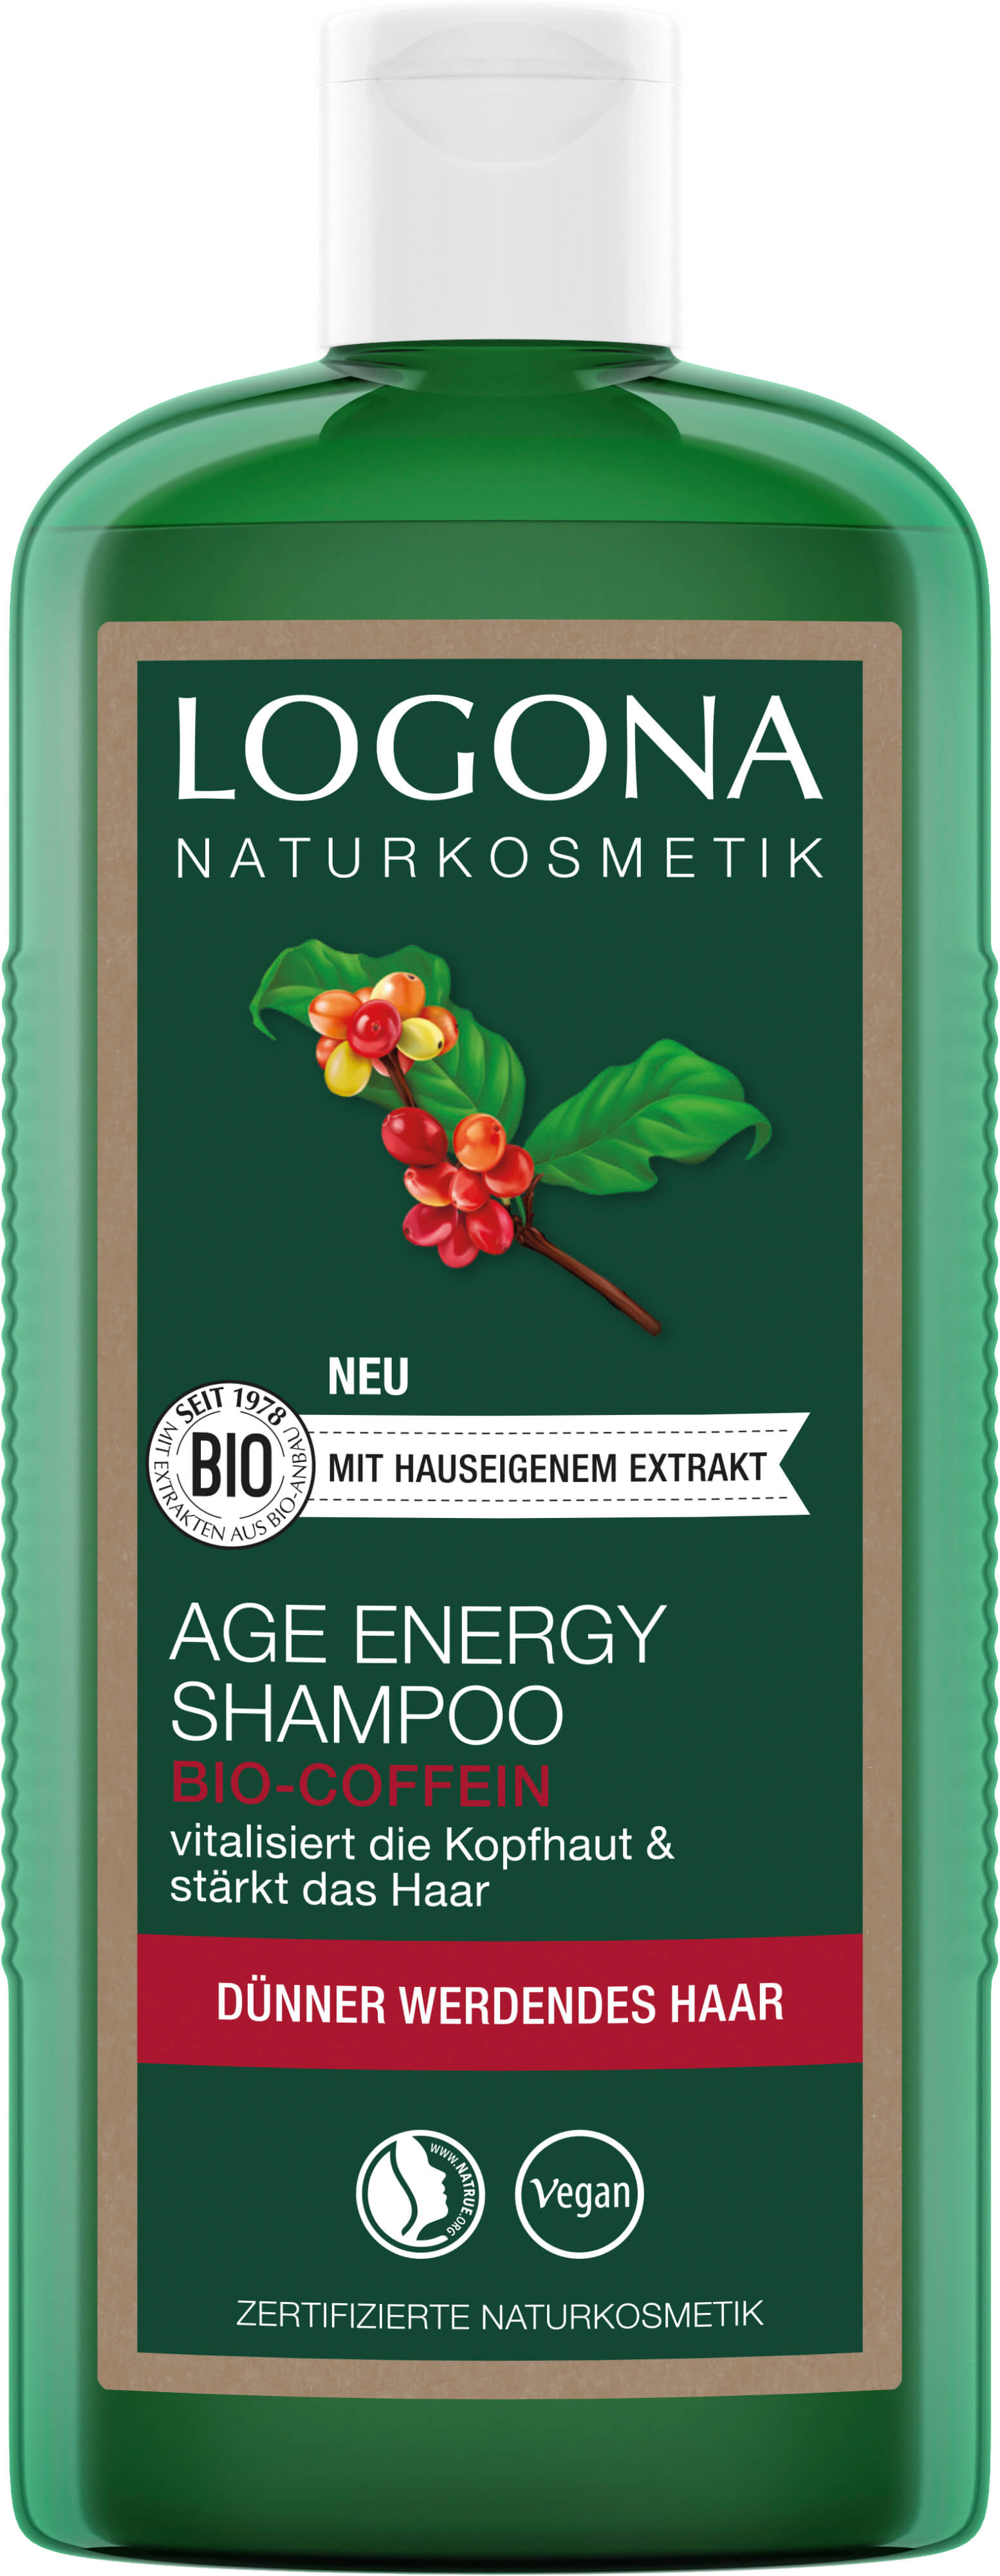 Age Energy Shampoo LOGONA Naturkosmetik Bio-Coffein 